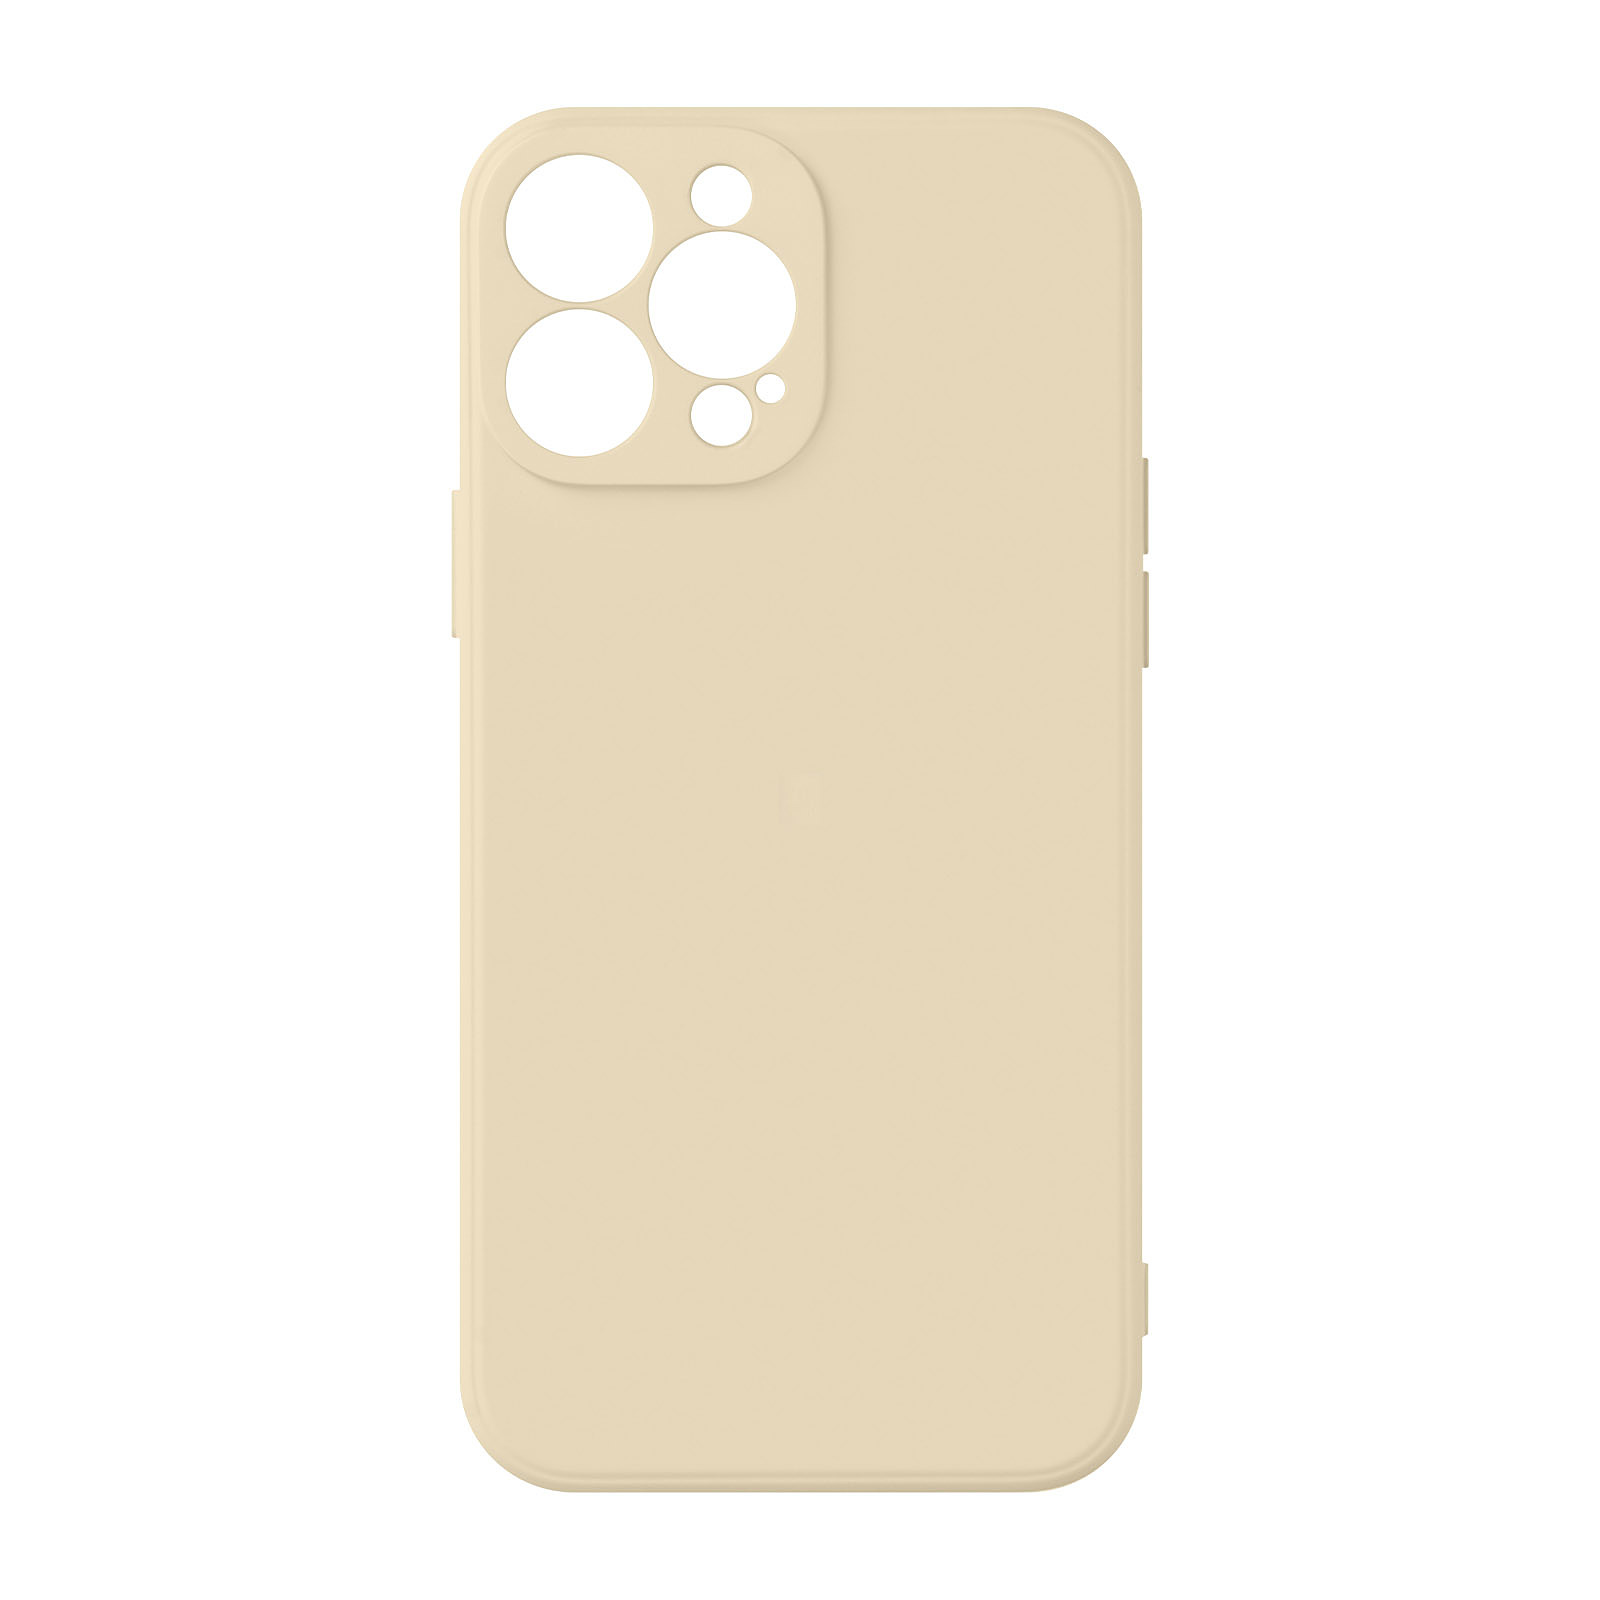 Avizar Coque pour iPhone 13 Pro Max Silicone Semi-Rigide avec Finition Soft Touch Blanc casse - Coque telephone Avizar